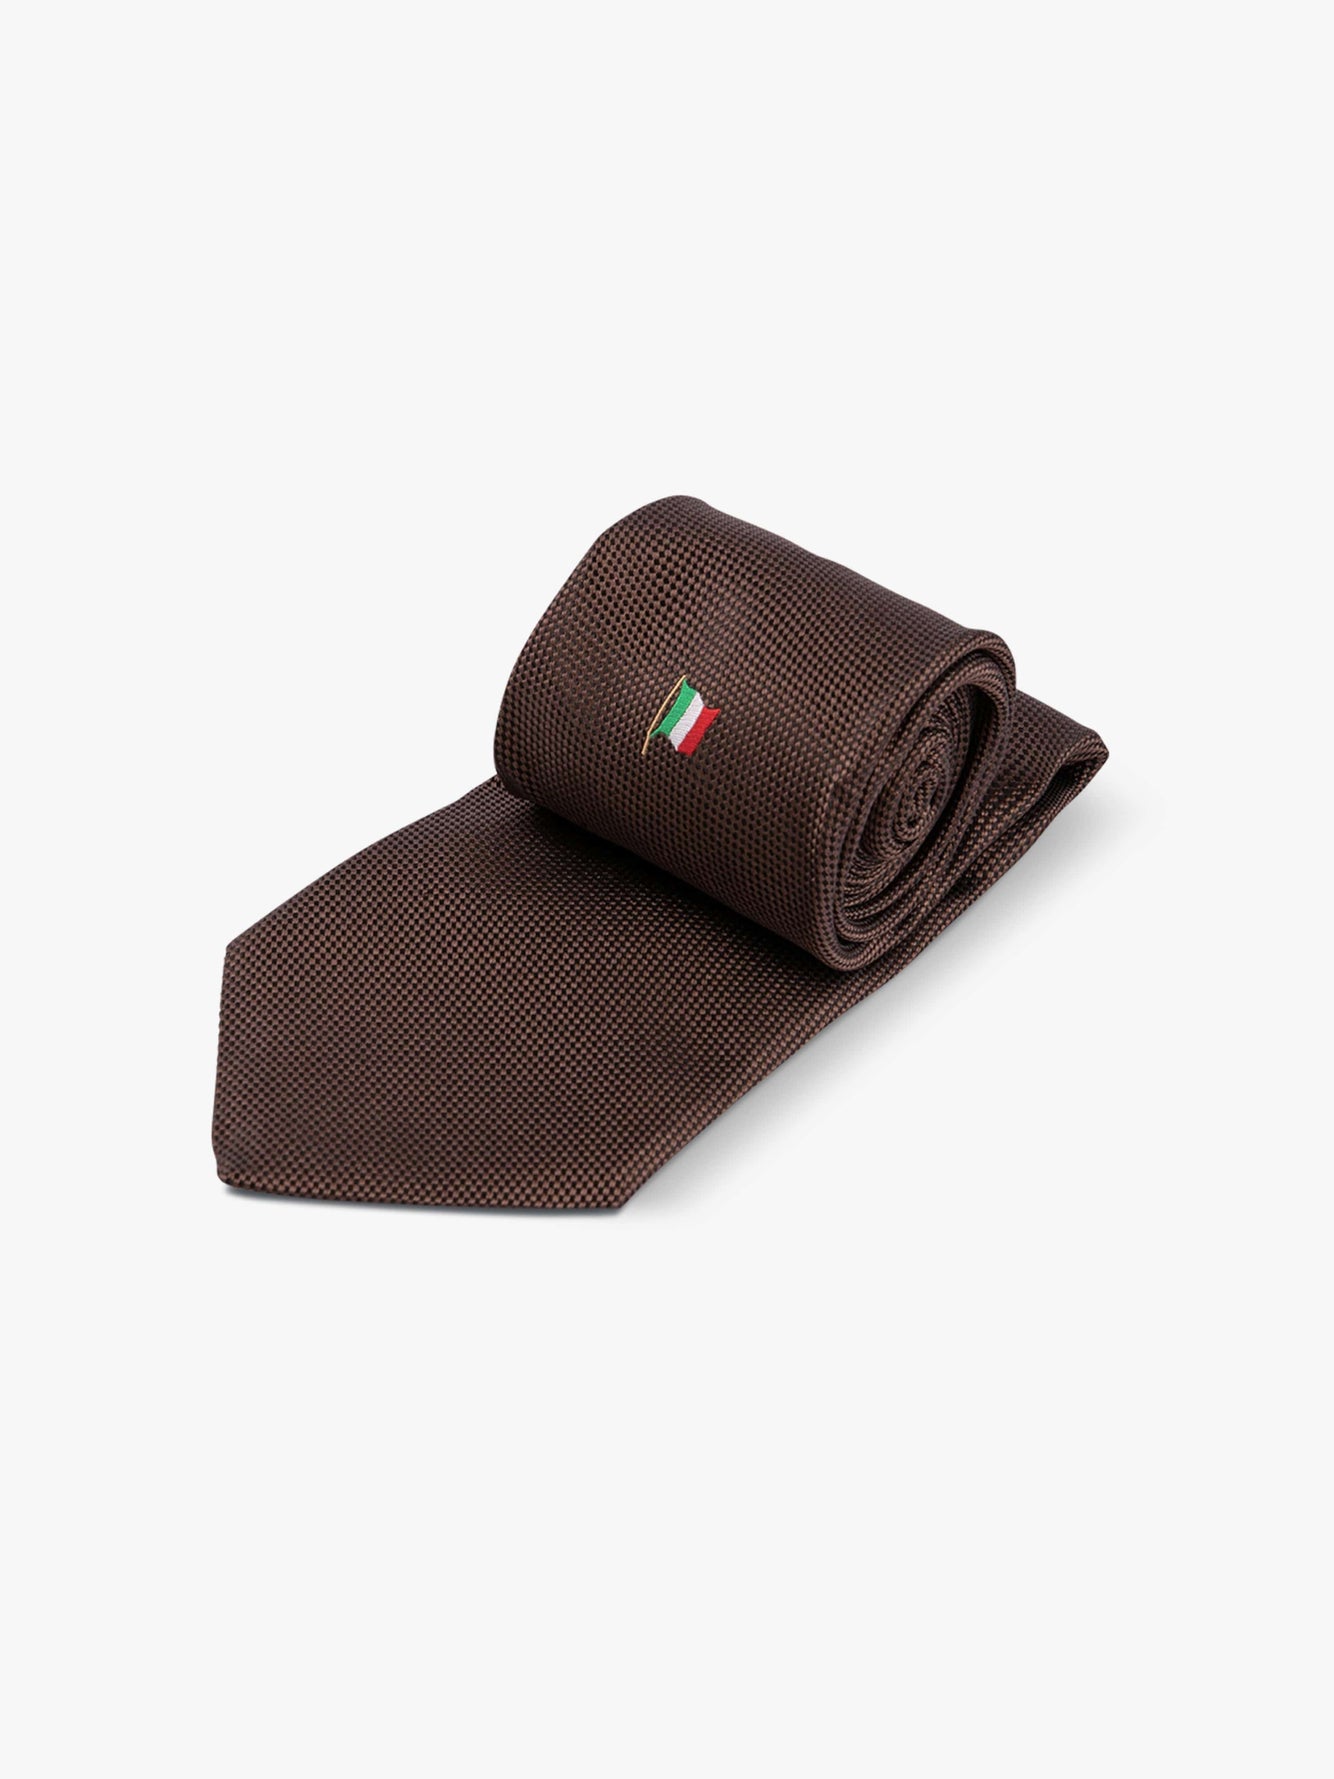 Brown Italian Flag Tie - Grand Le Mar